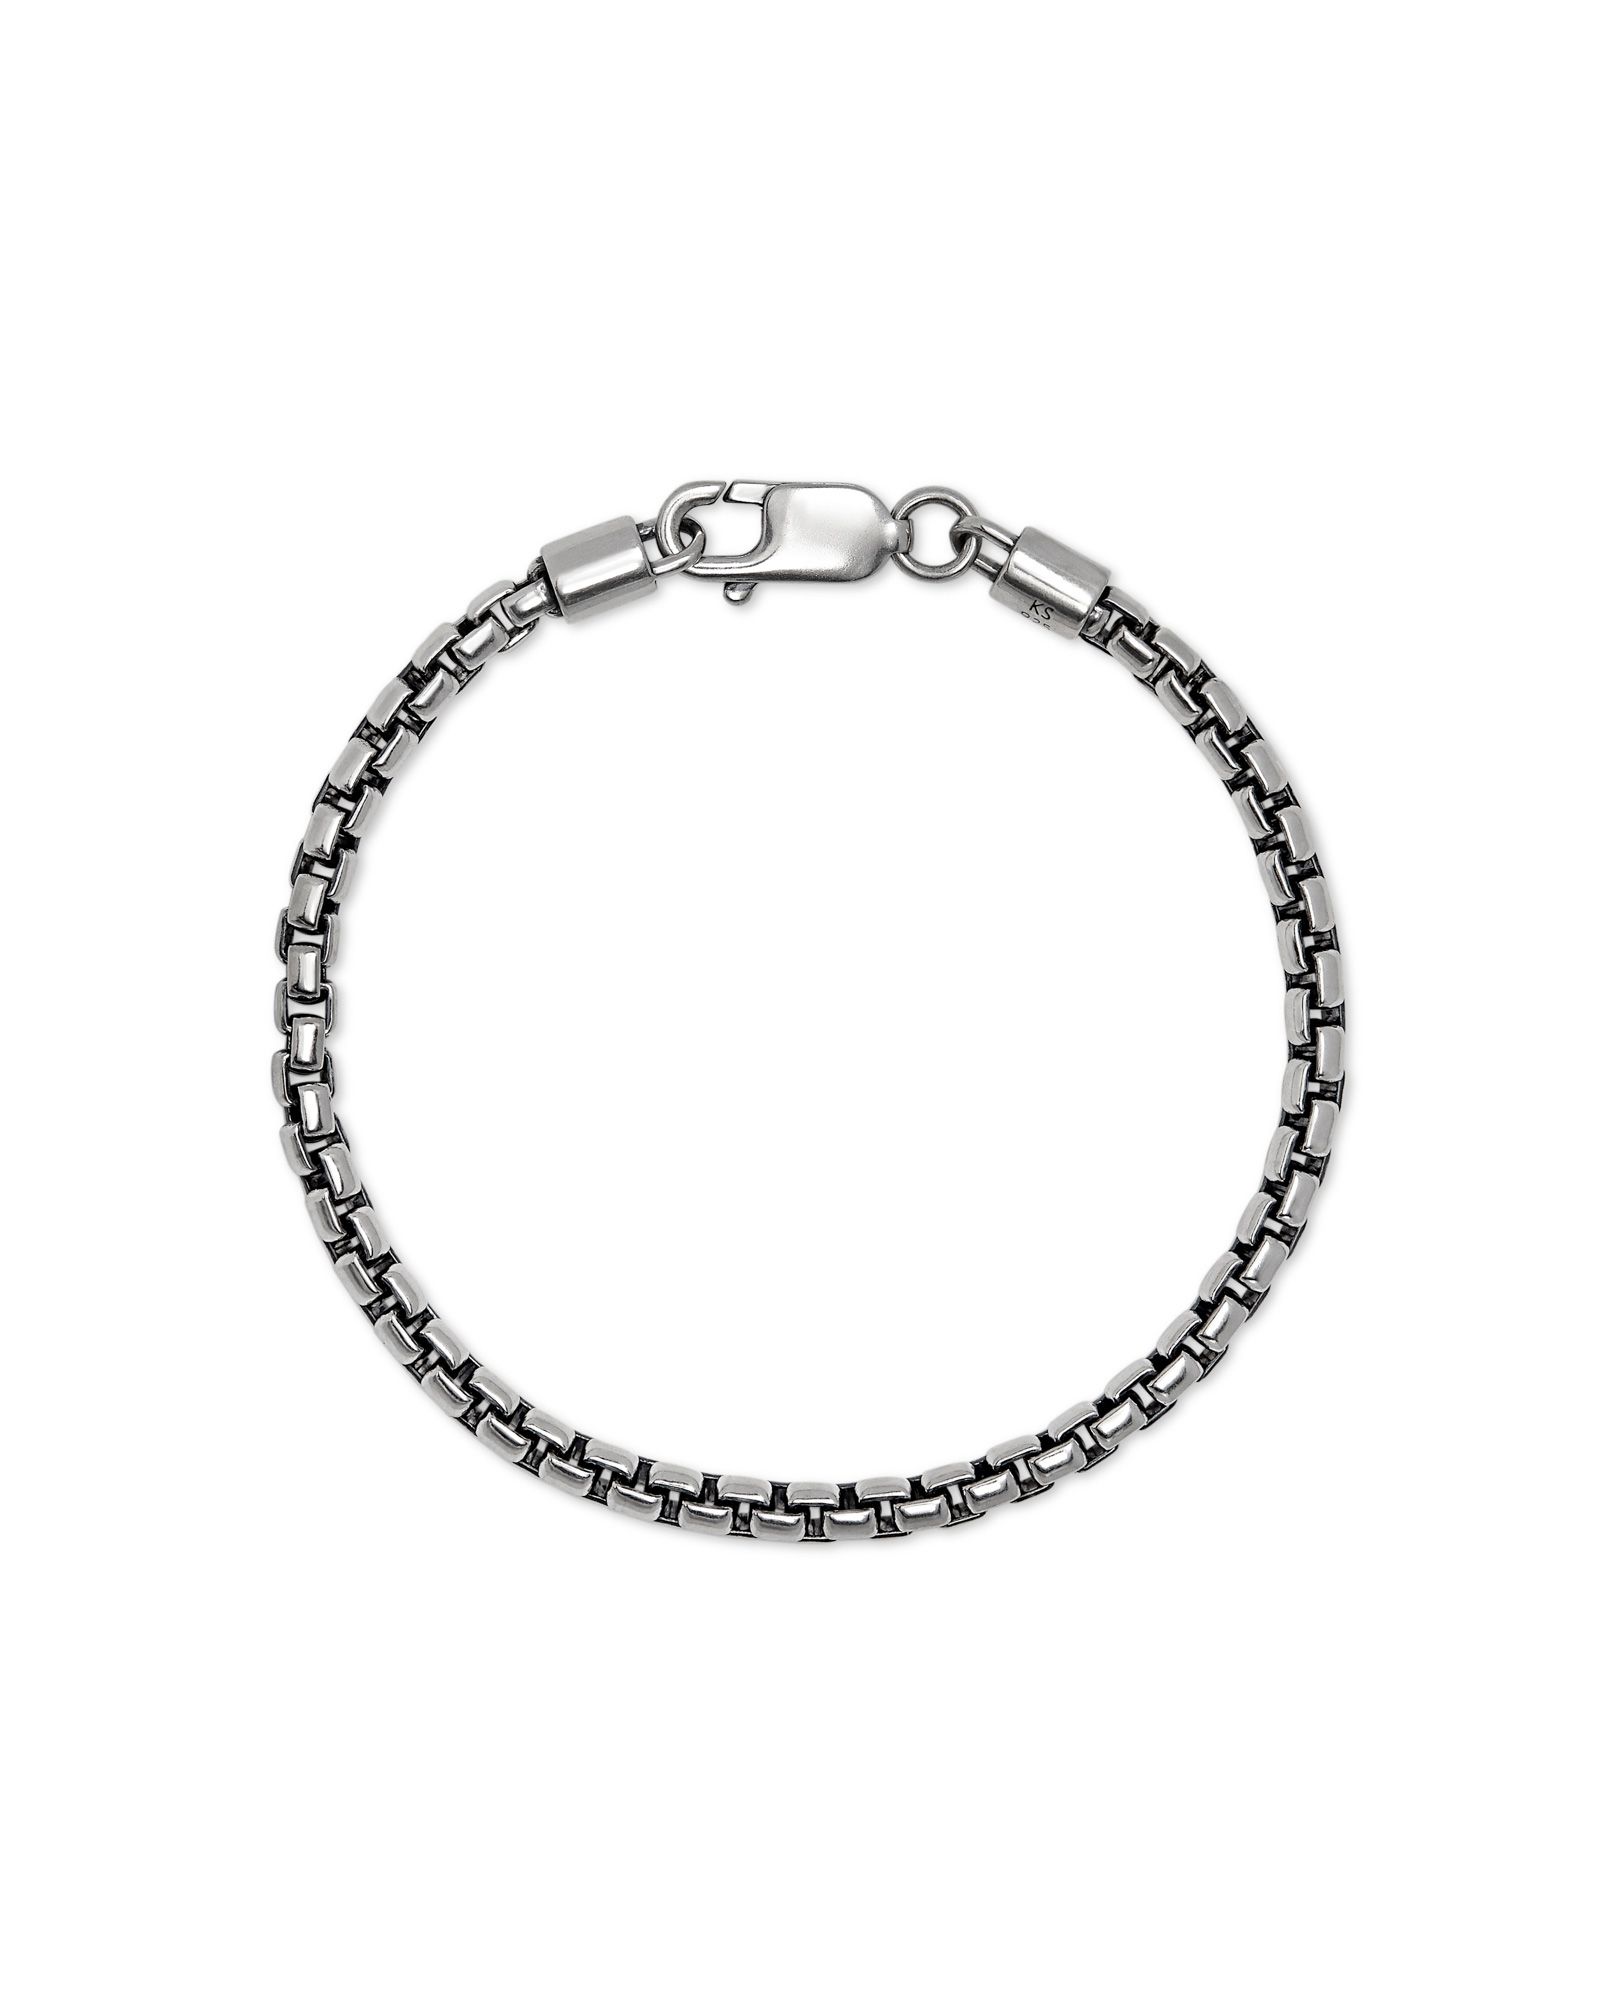 Beck Round Box Chain Bracelet in Oxidized Sterling Silver | Kendra Scott